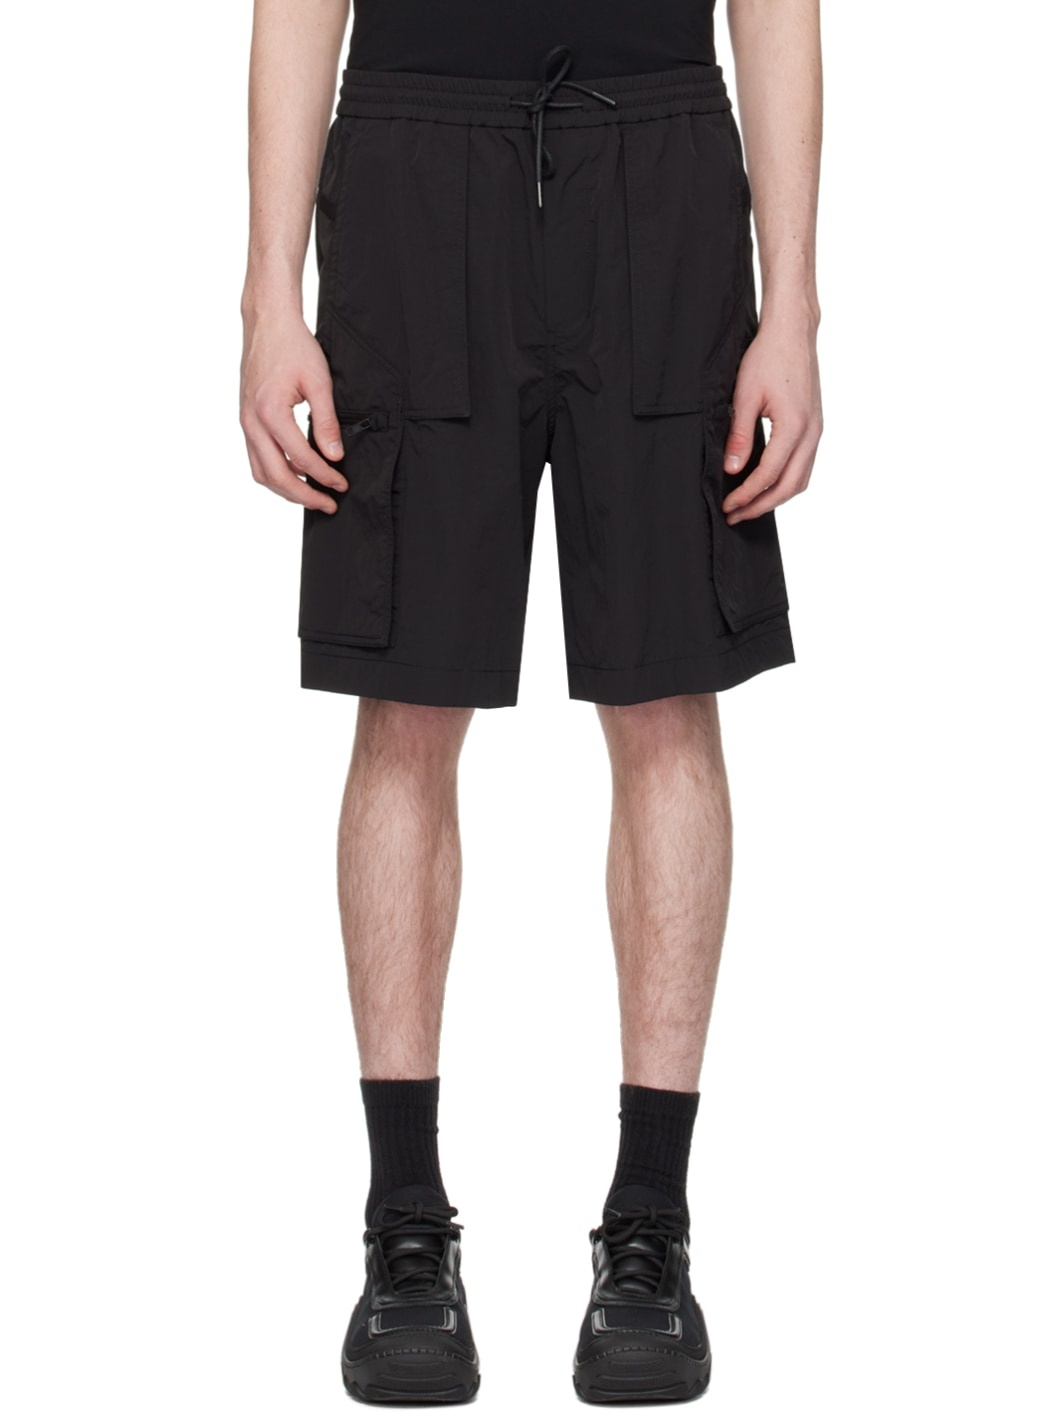 Black Zip Shorts - 1